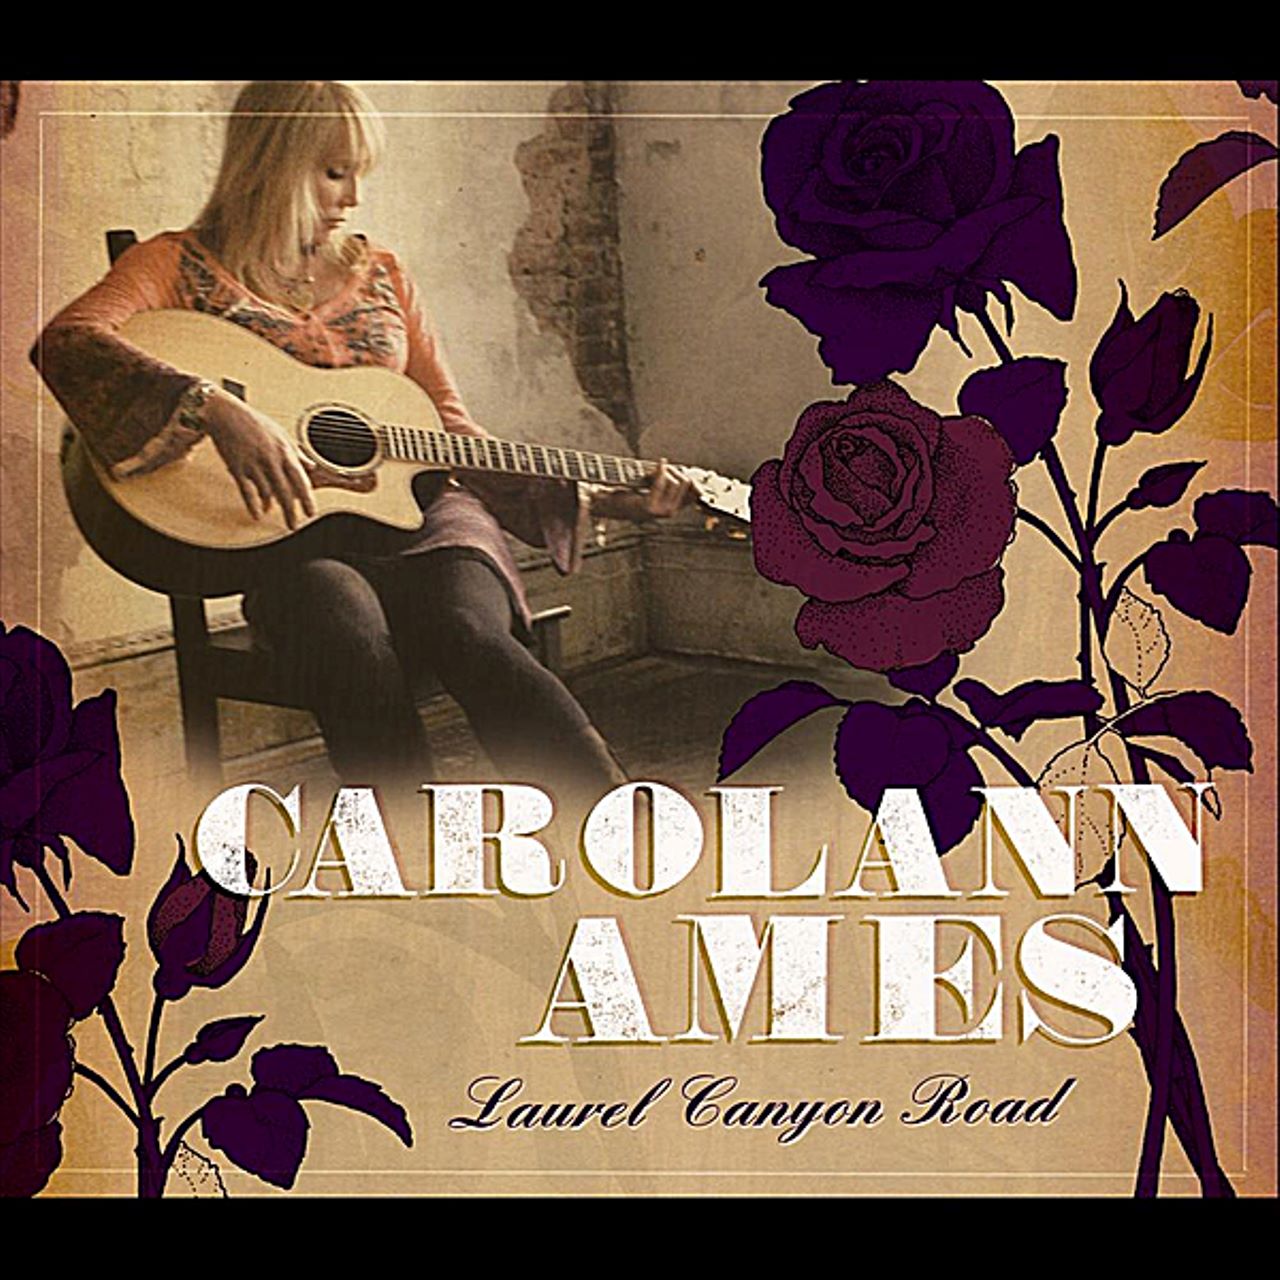 Carolann Ames - Laurel Canyon Road cover album